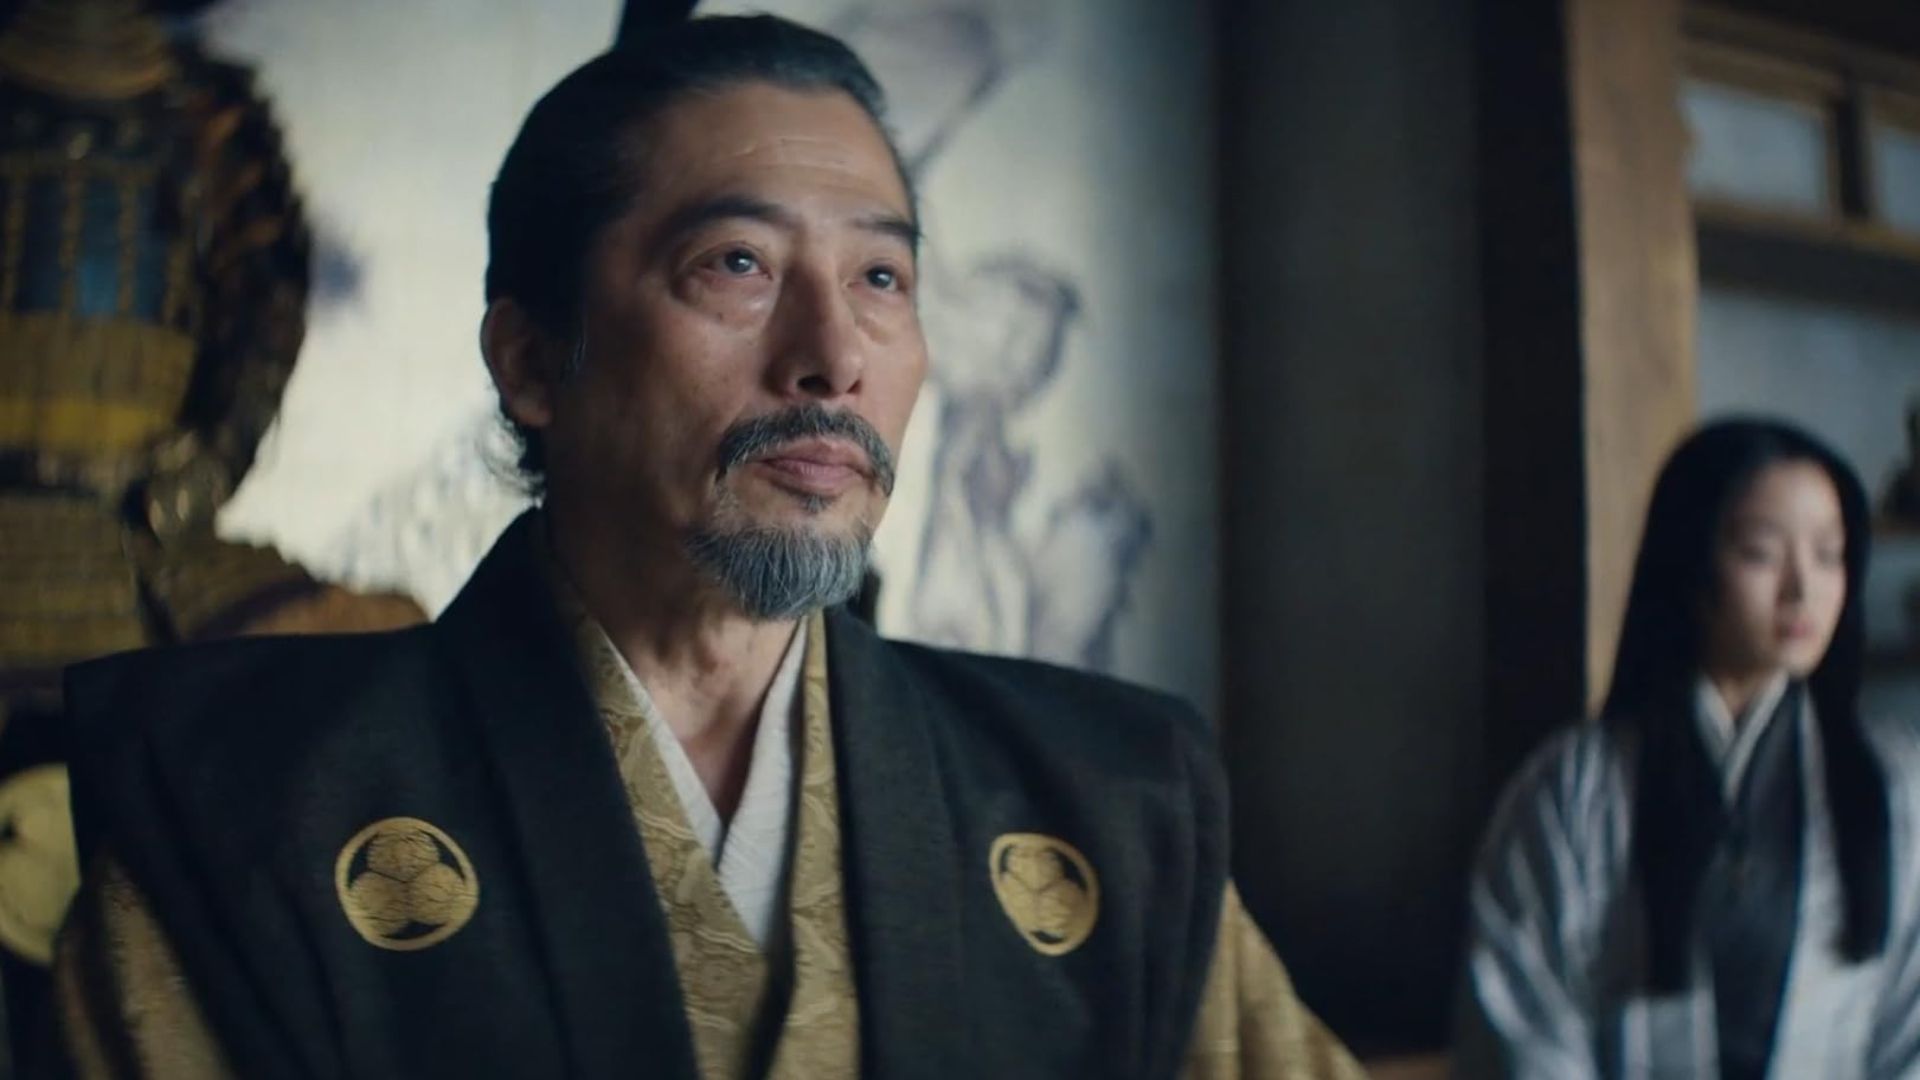 Hiroyuki Sanada as Lord Yoshii Toranag wearing black and gold robes looking off-screen in Shogun